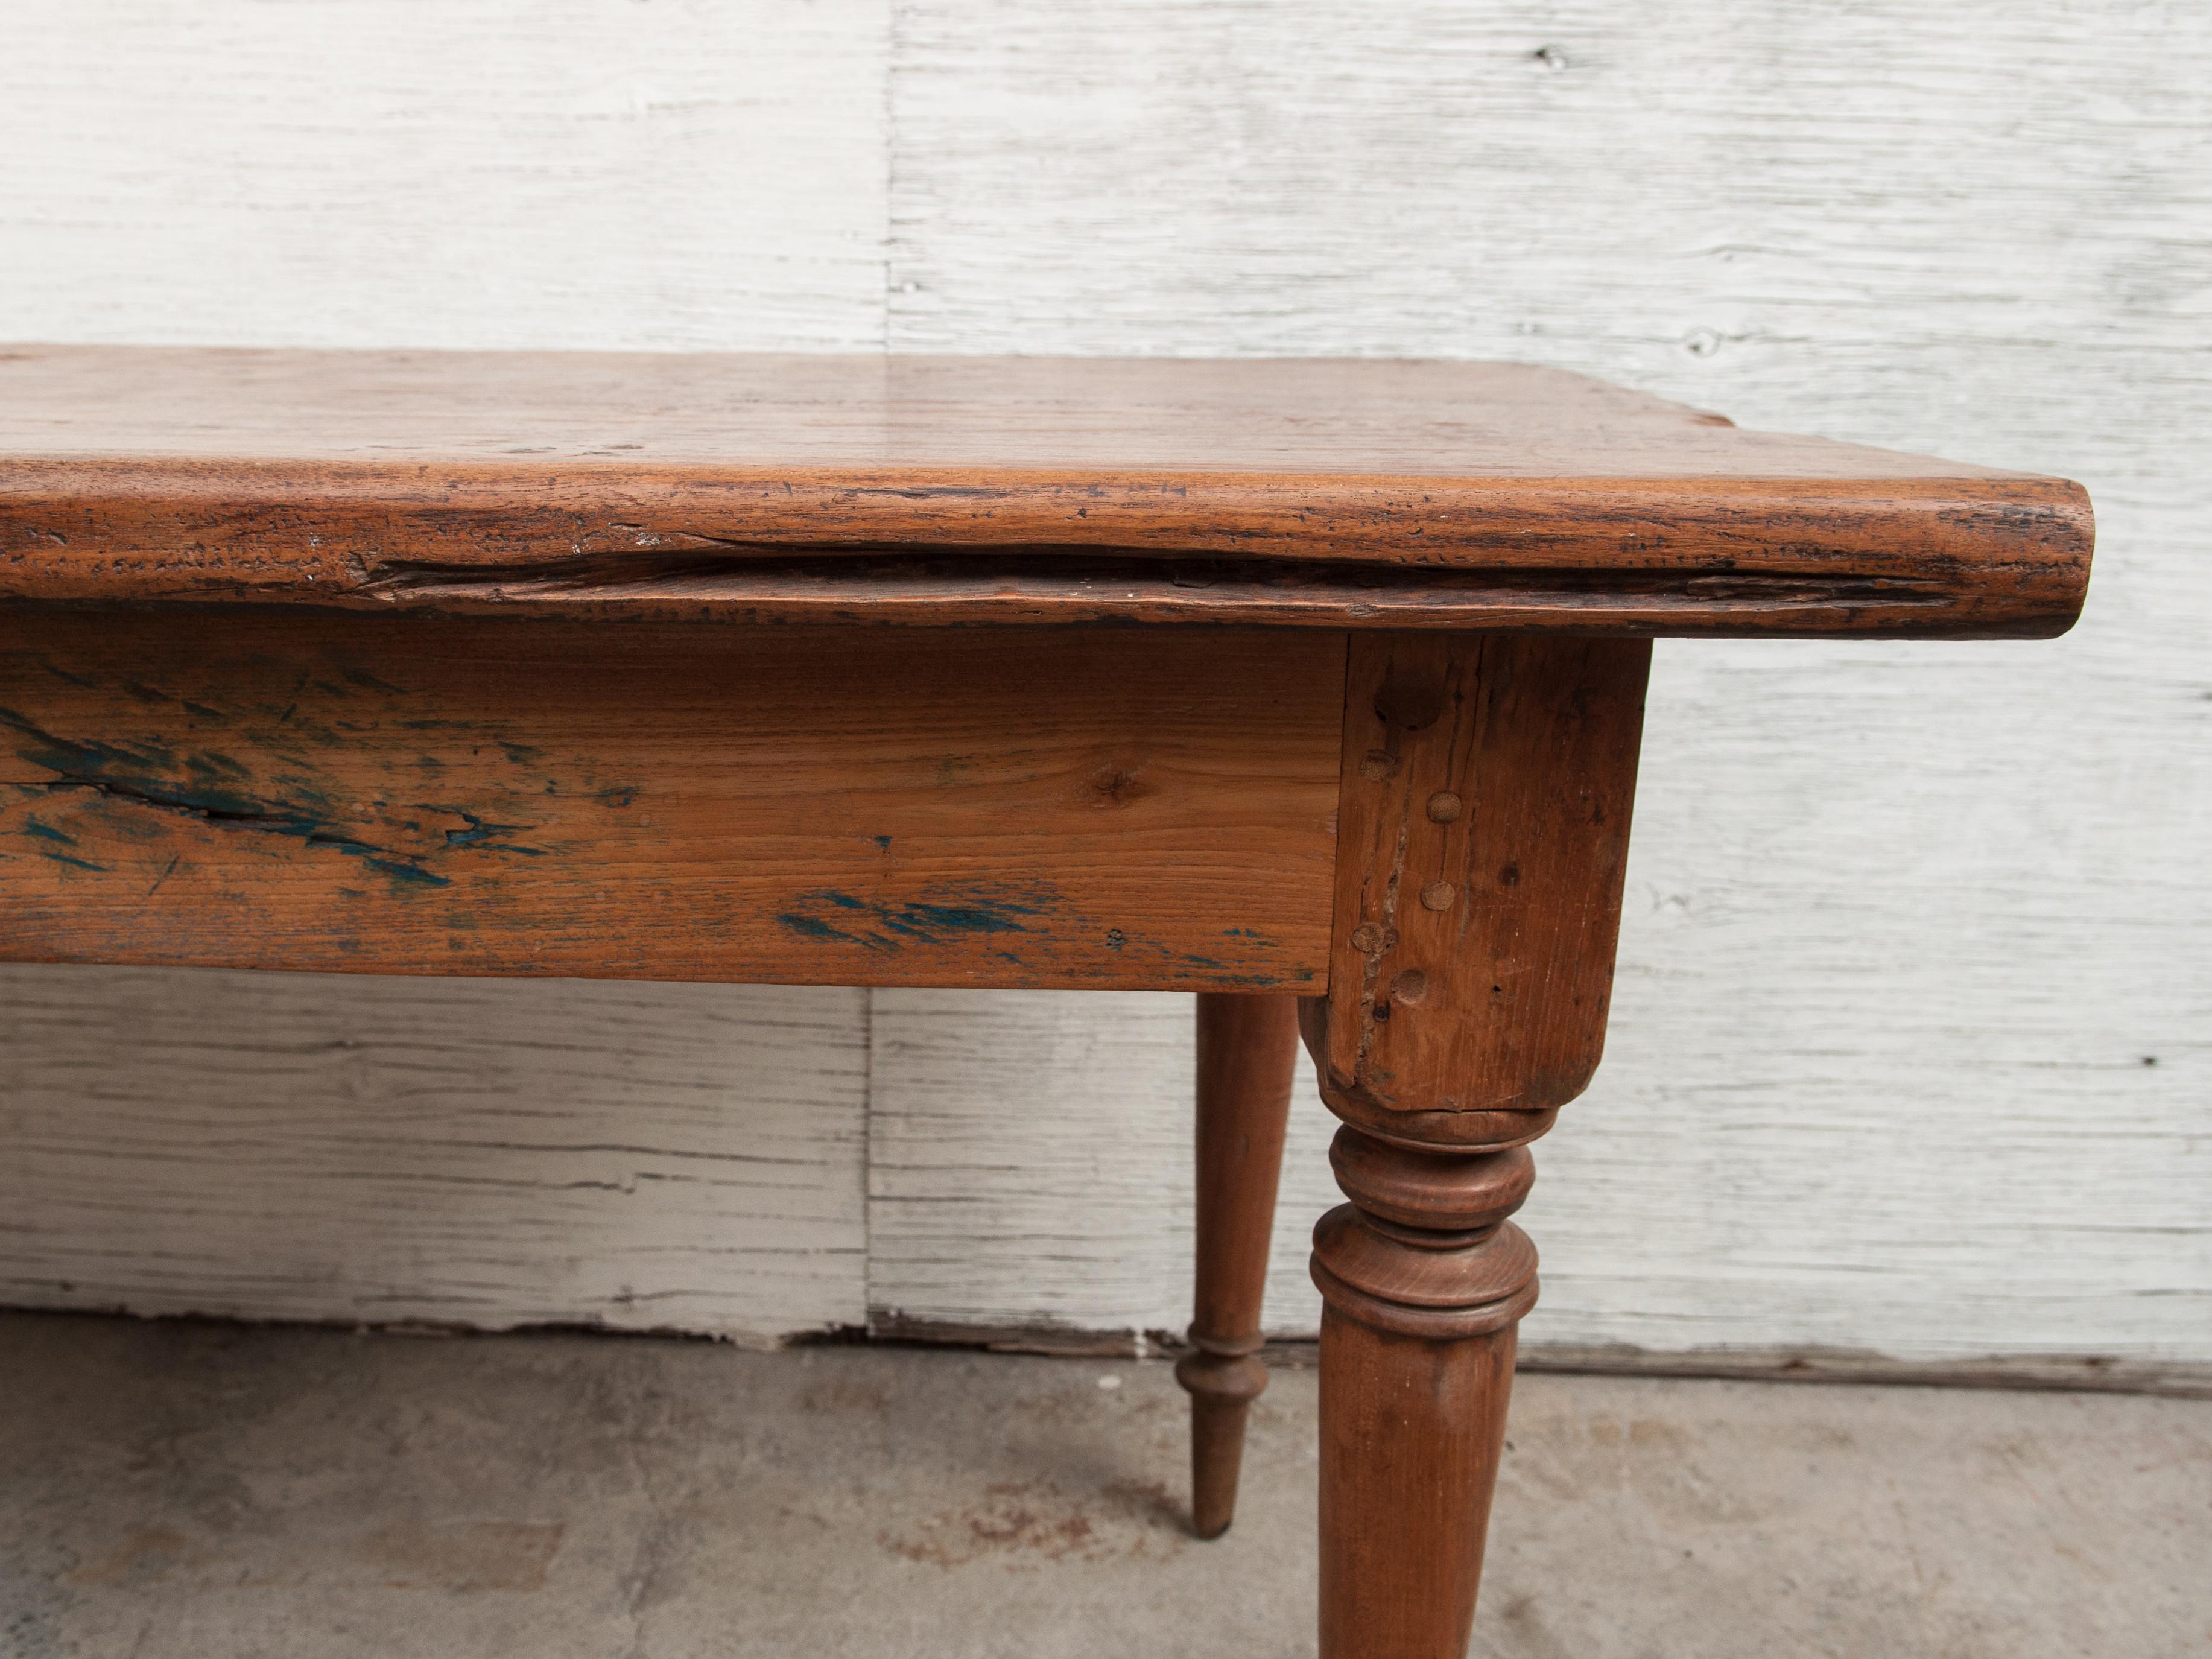 Hand-Crafted Vintage Teak Kitchen or Farm Table, Java, Single Plank Top, Mid-20th Century